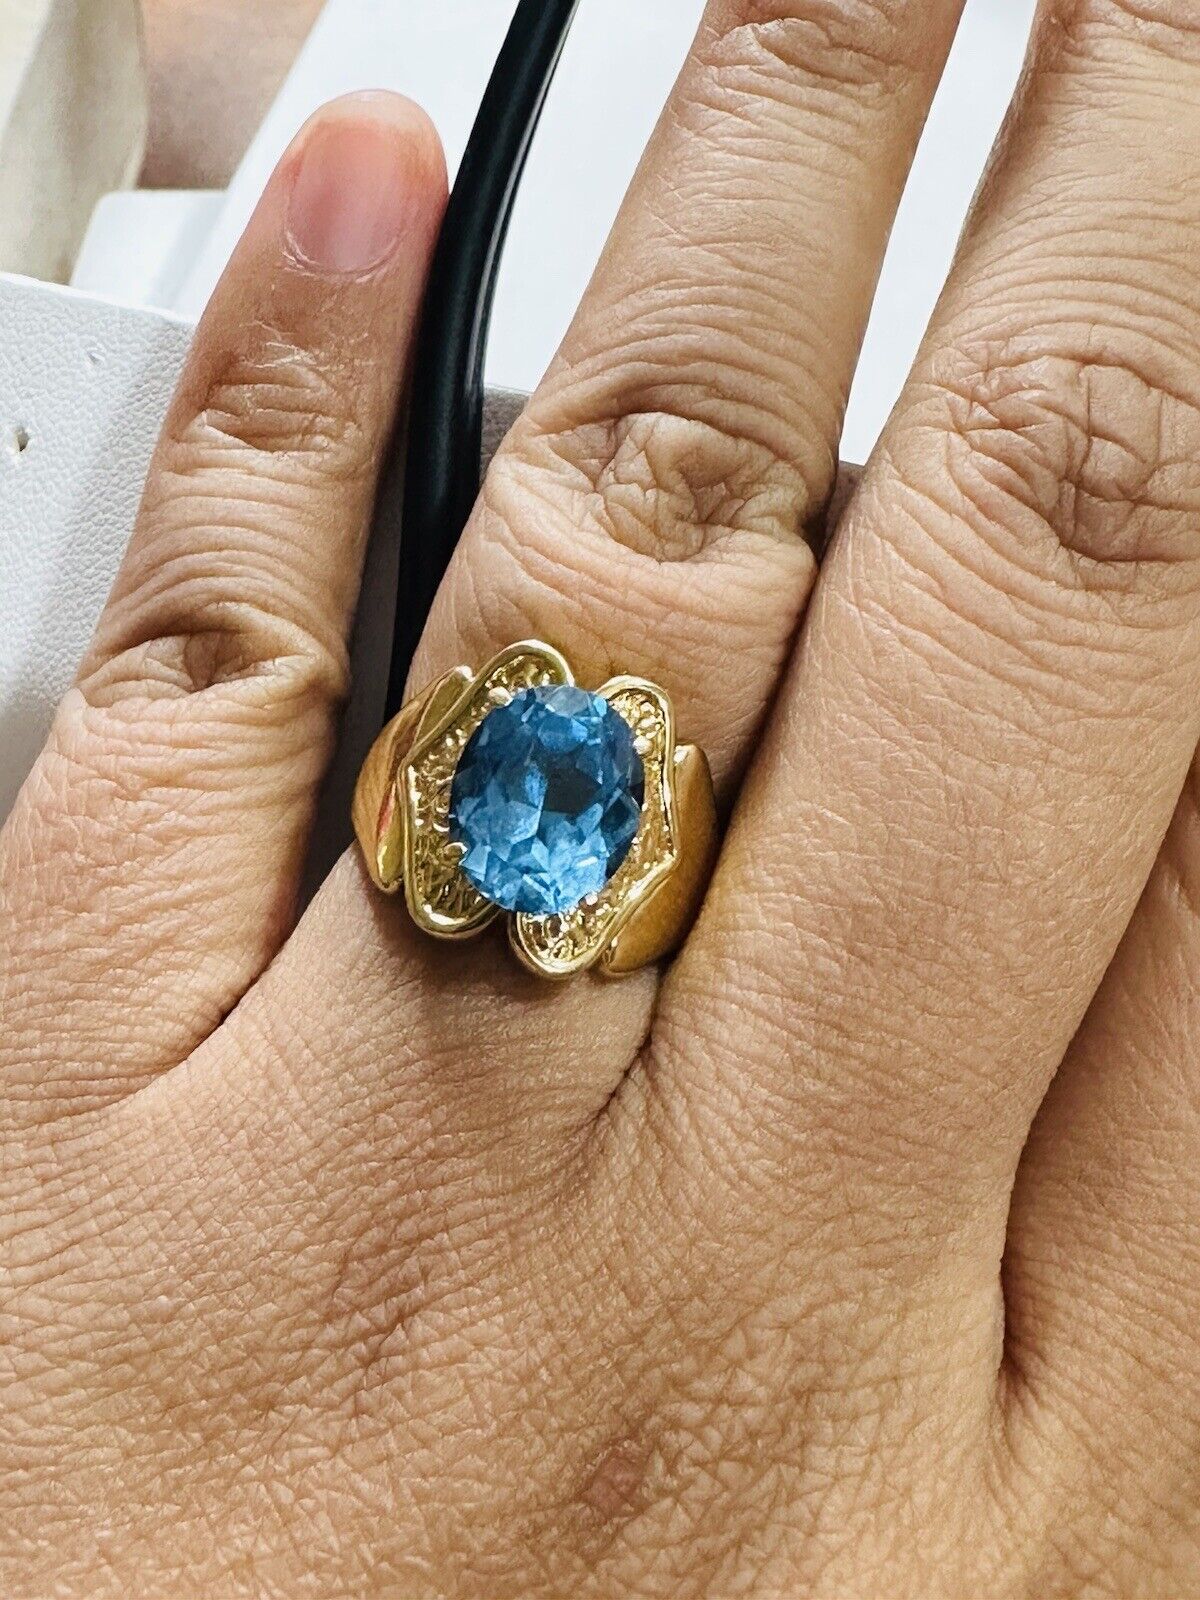 K18 Japan Gold Diamond Ring Real .49 carat Blue Topaz Woman’s Ring 7/7.5”  6.9g